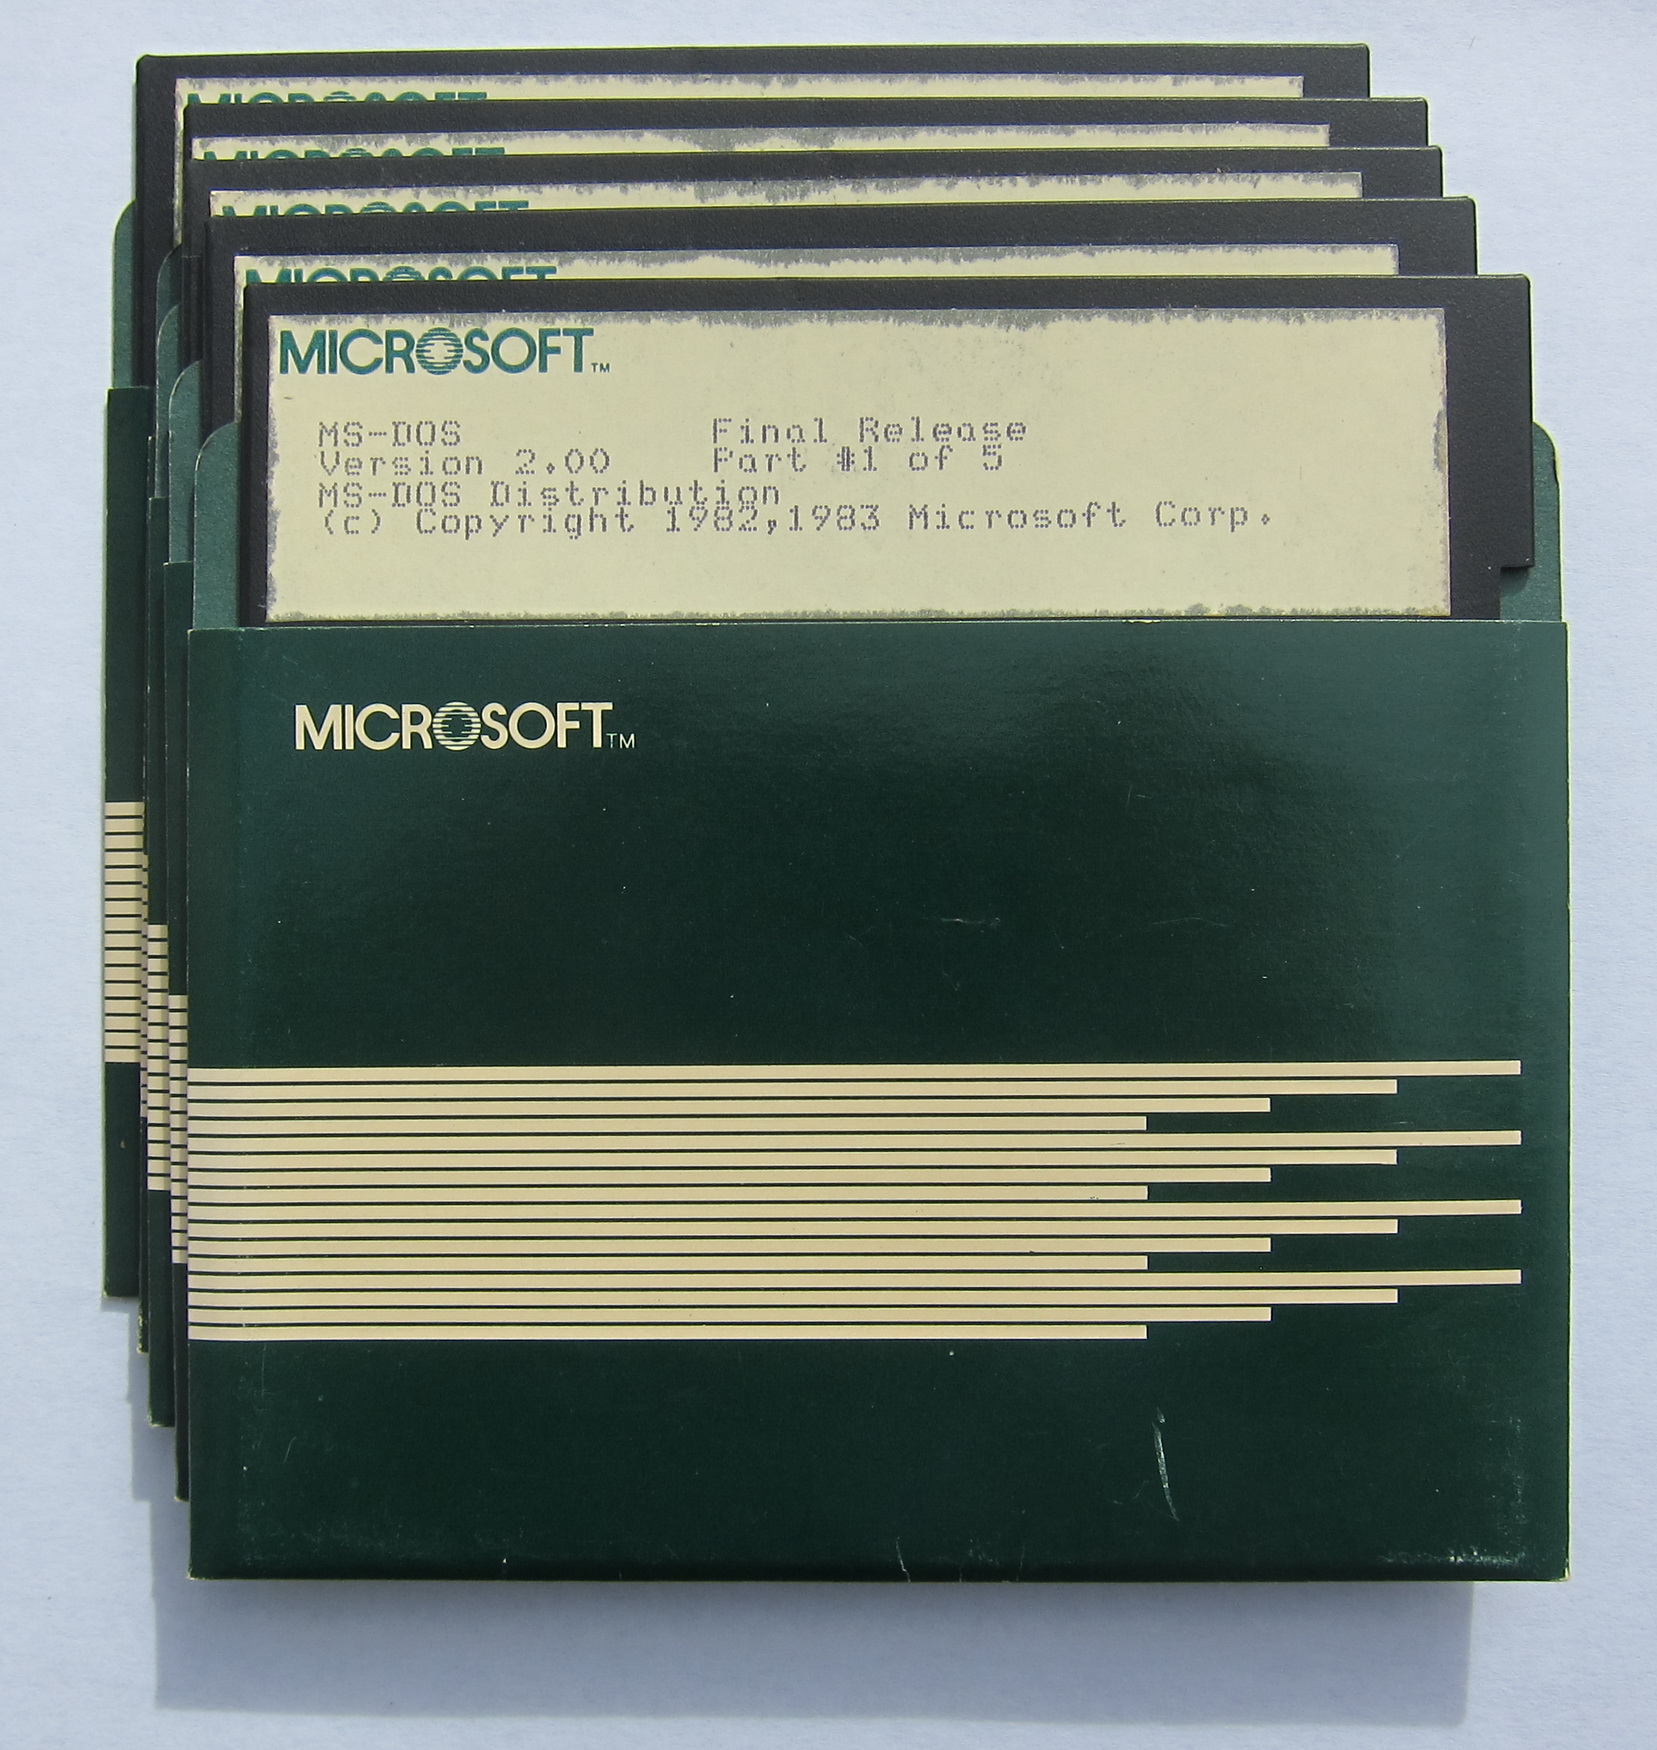 reddit 90s skills - ms dos 2.0 - Sabet Microsoft. MsDos Version 2.00 MsDos Distribution. c Copyright 1982 1983 Microsoft Corp. Final Release Part 41 of 5 Microsoftm